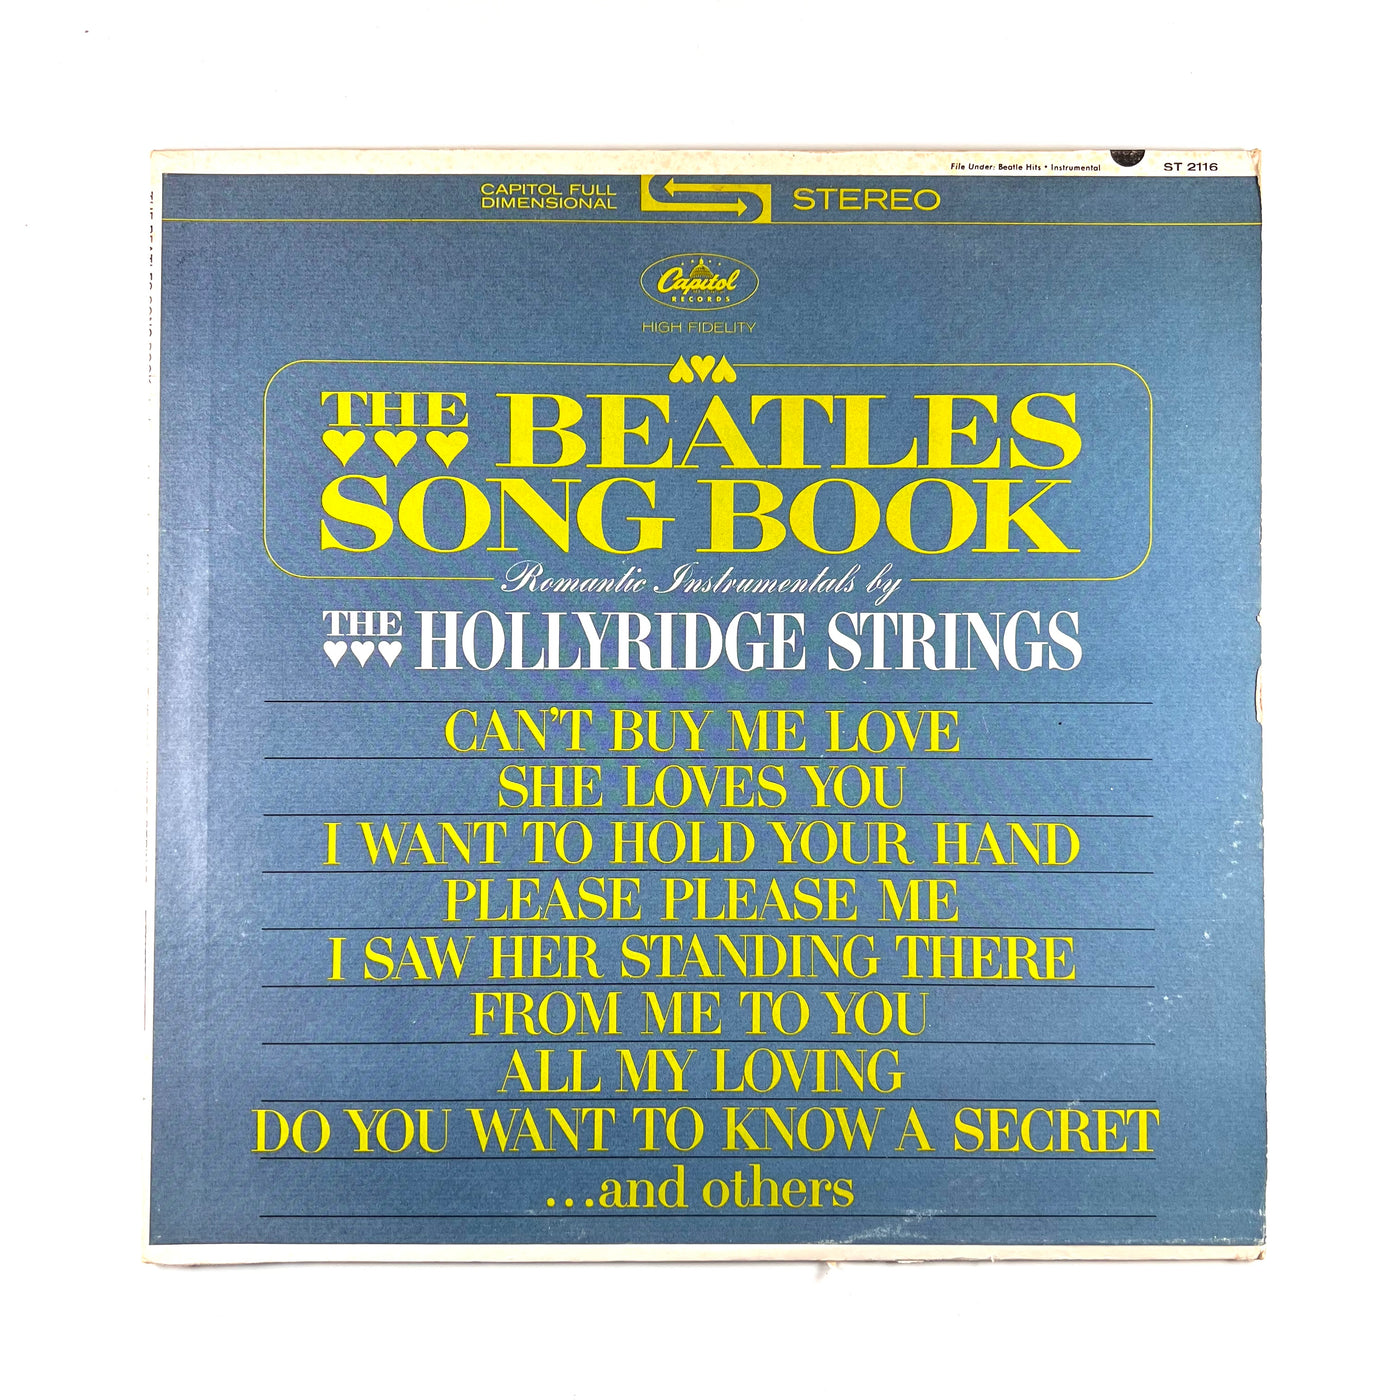 The Hollyridge Strings - The Beatles Song Book